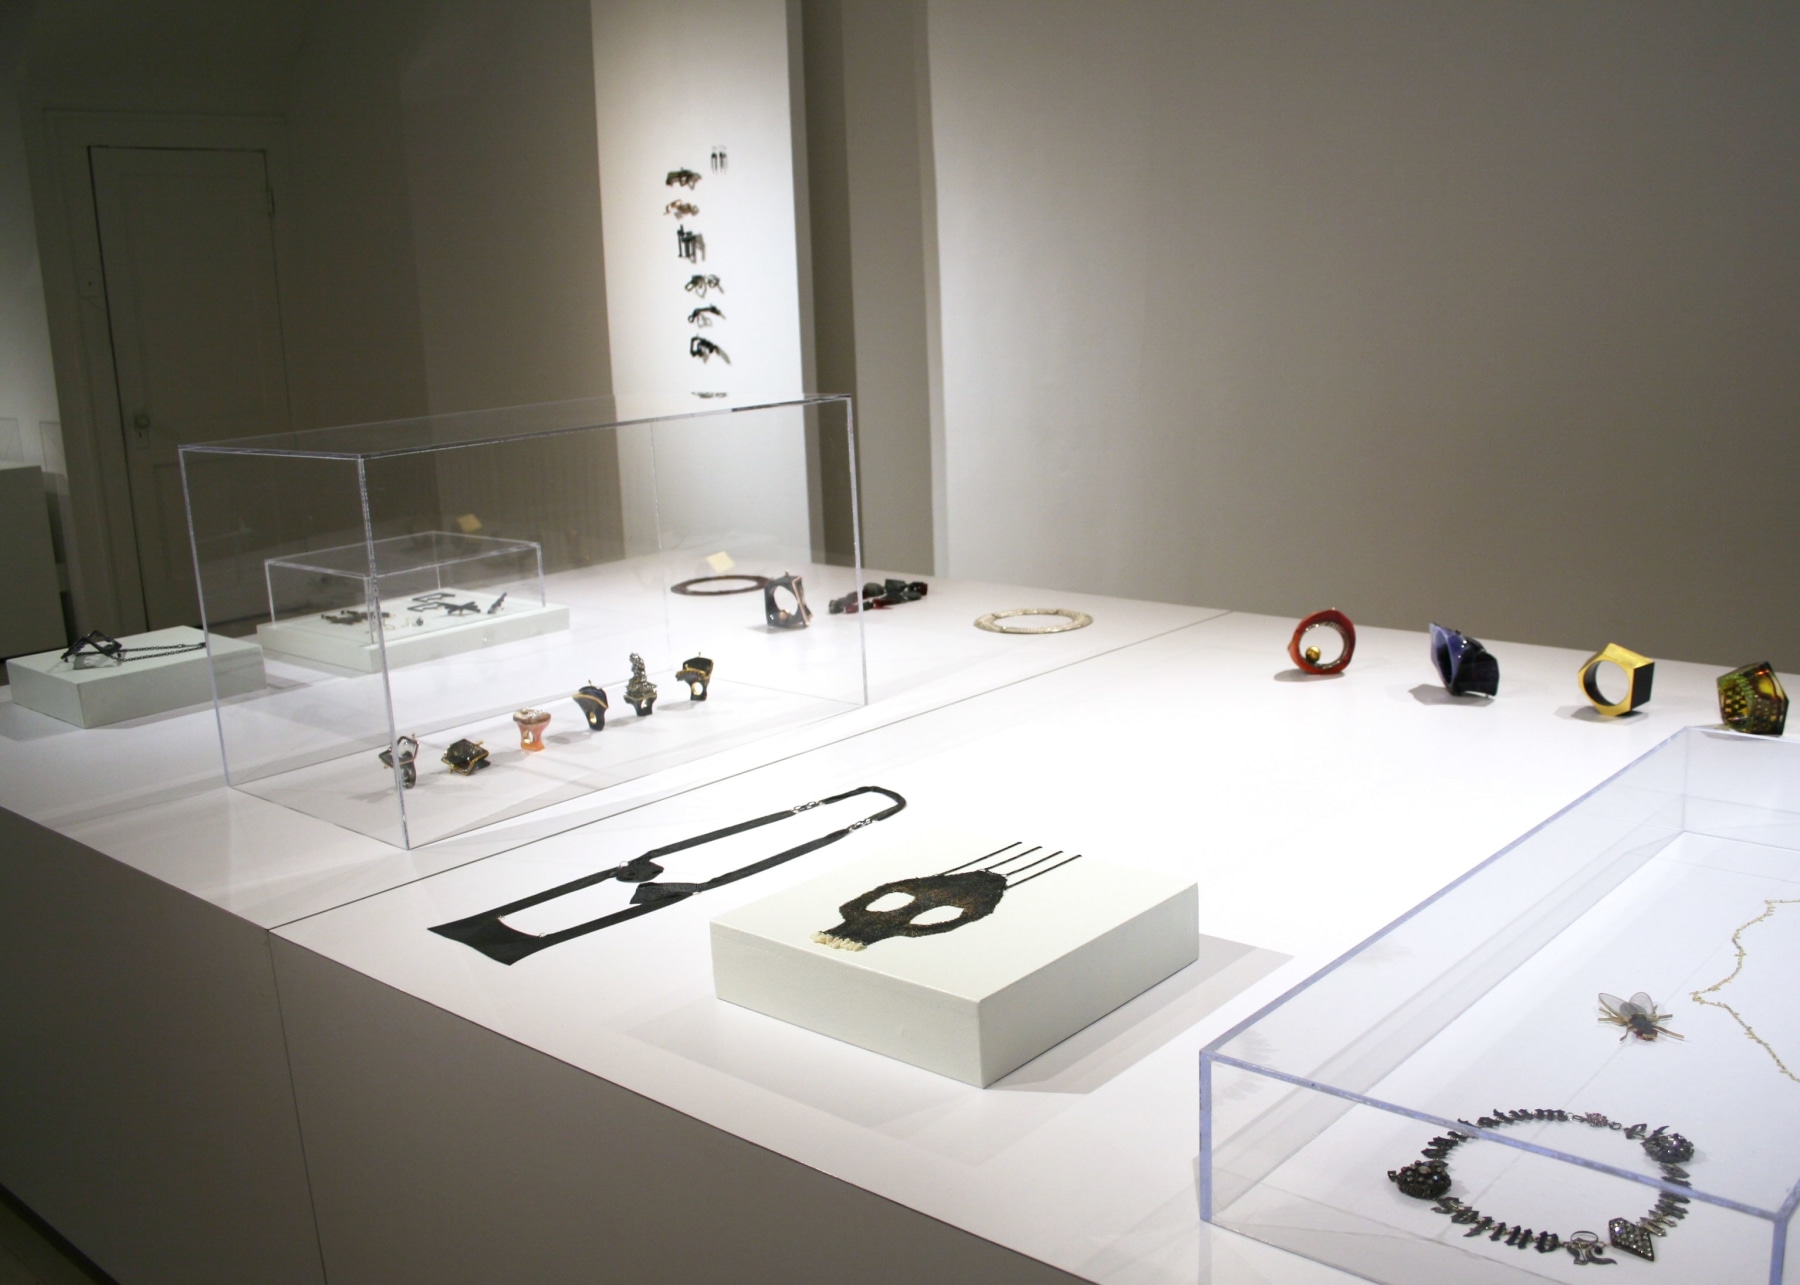 Petra Zimmermann, Philip Sajet, Exhibition, contemporary jewelry, Dutch, Austrian, art jewelry